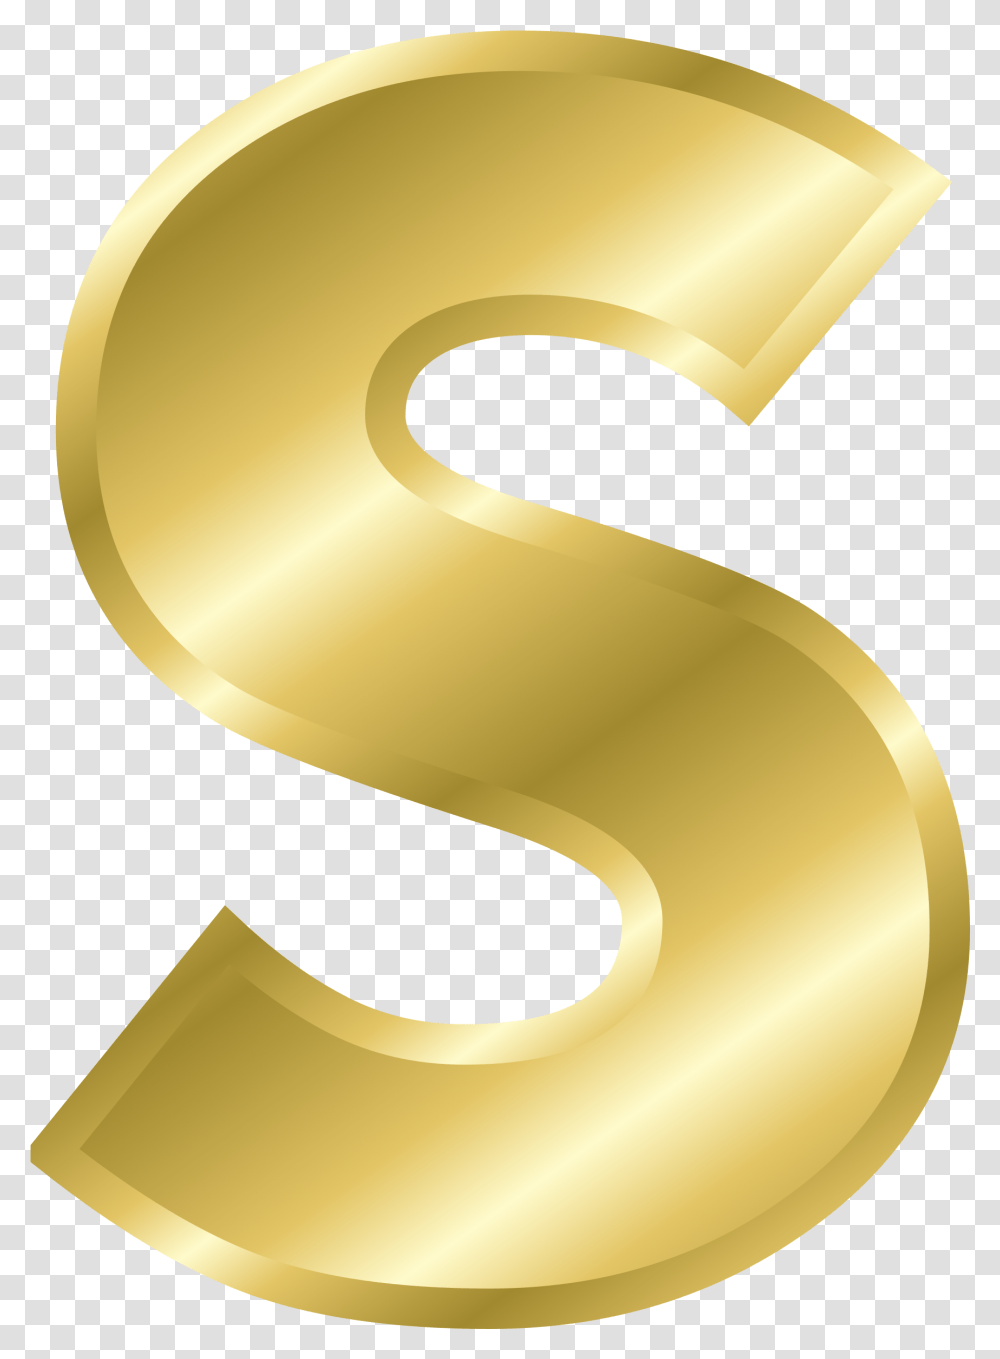 Gold Letter S Image With No Letter S Design Gold, Number, Symbol, Text, Lamp Transparent Png